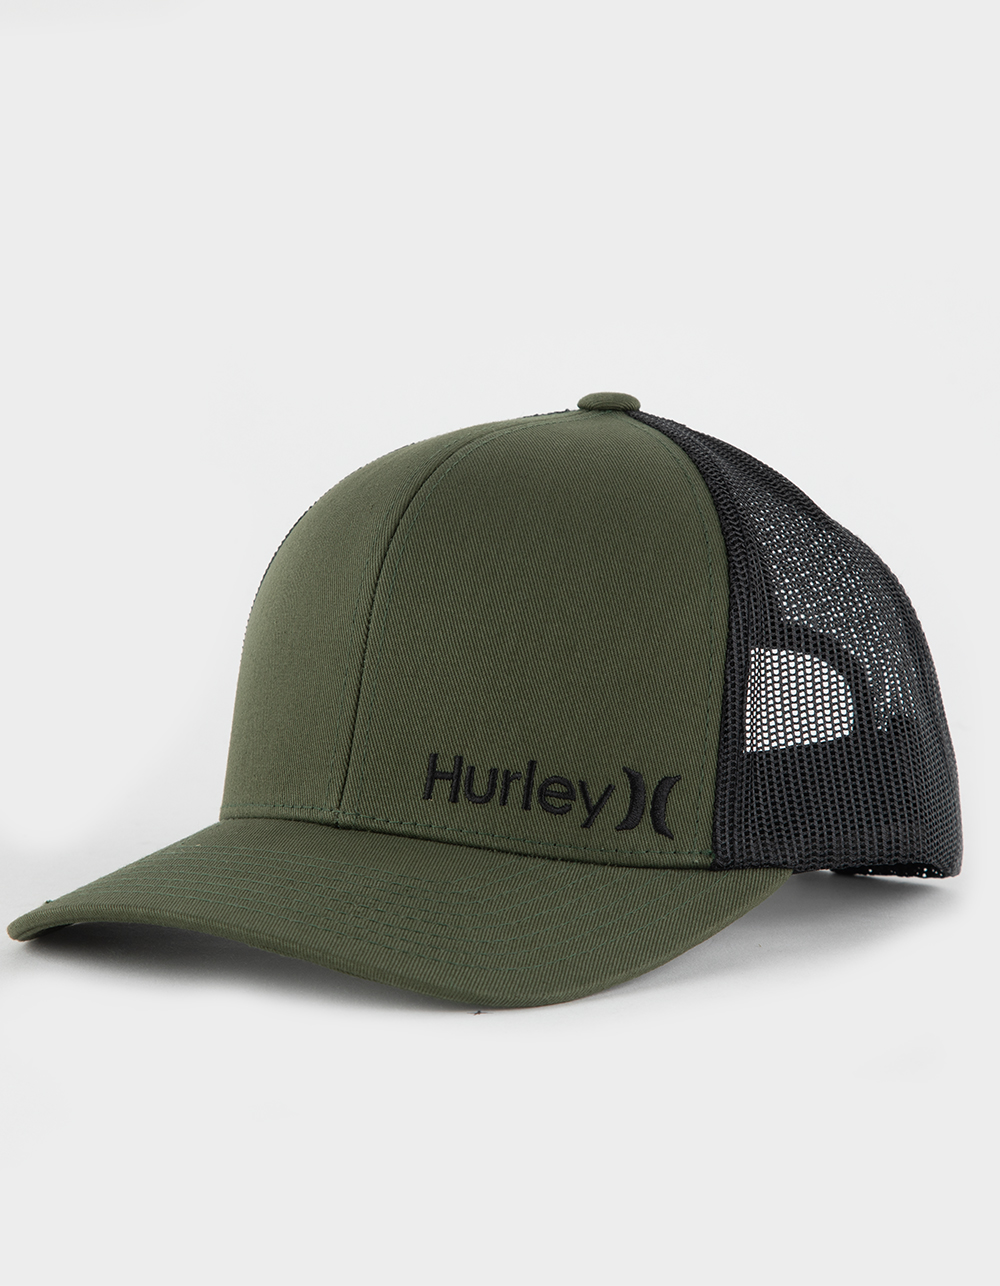 HURLEY Corp Staple Mens Trucker Hat